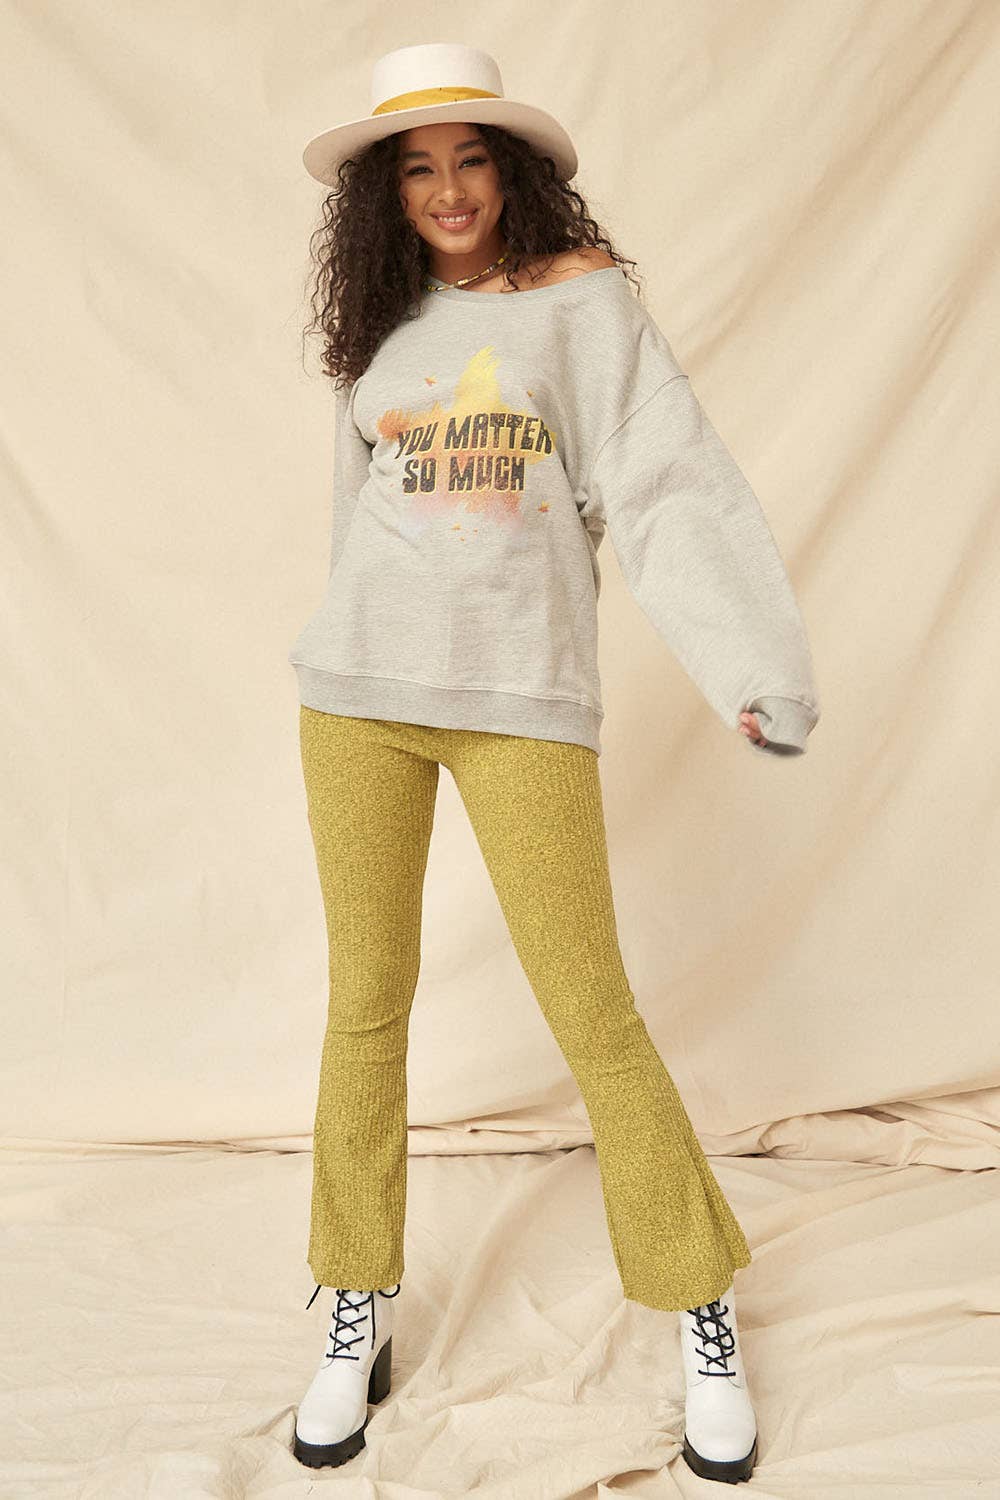 Sale You Matter Vintage-Print Graphic Sweatshirt